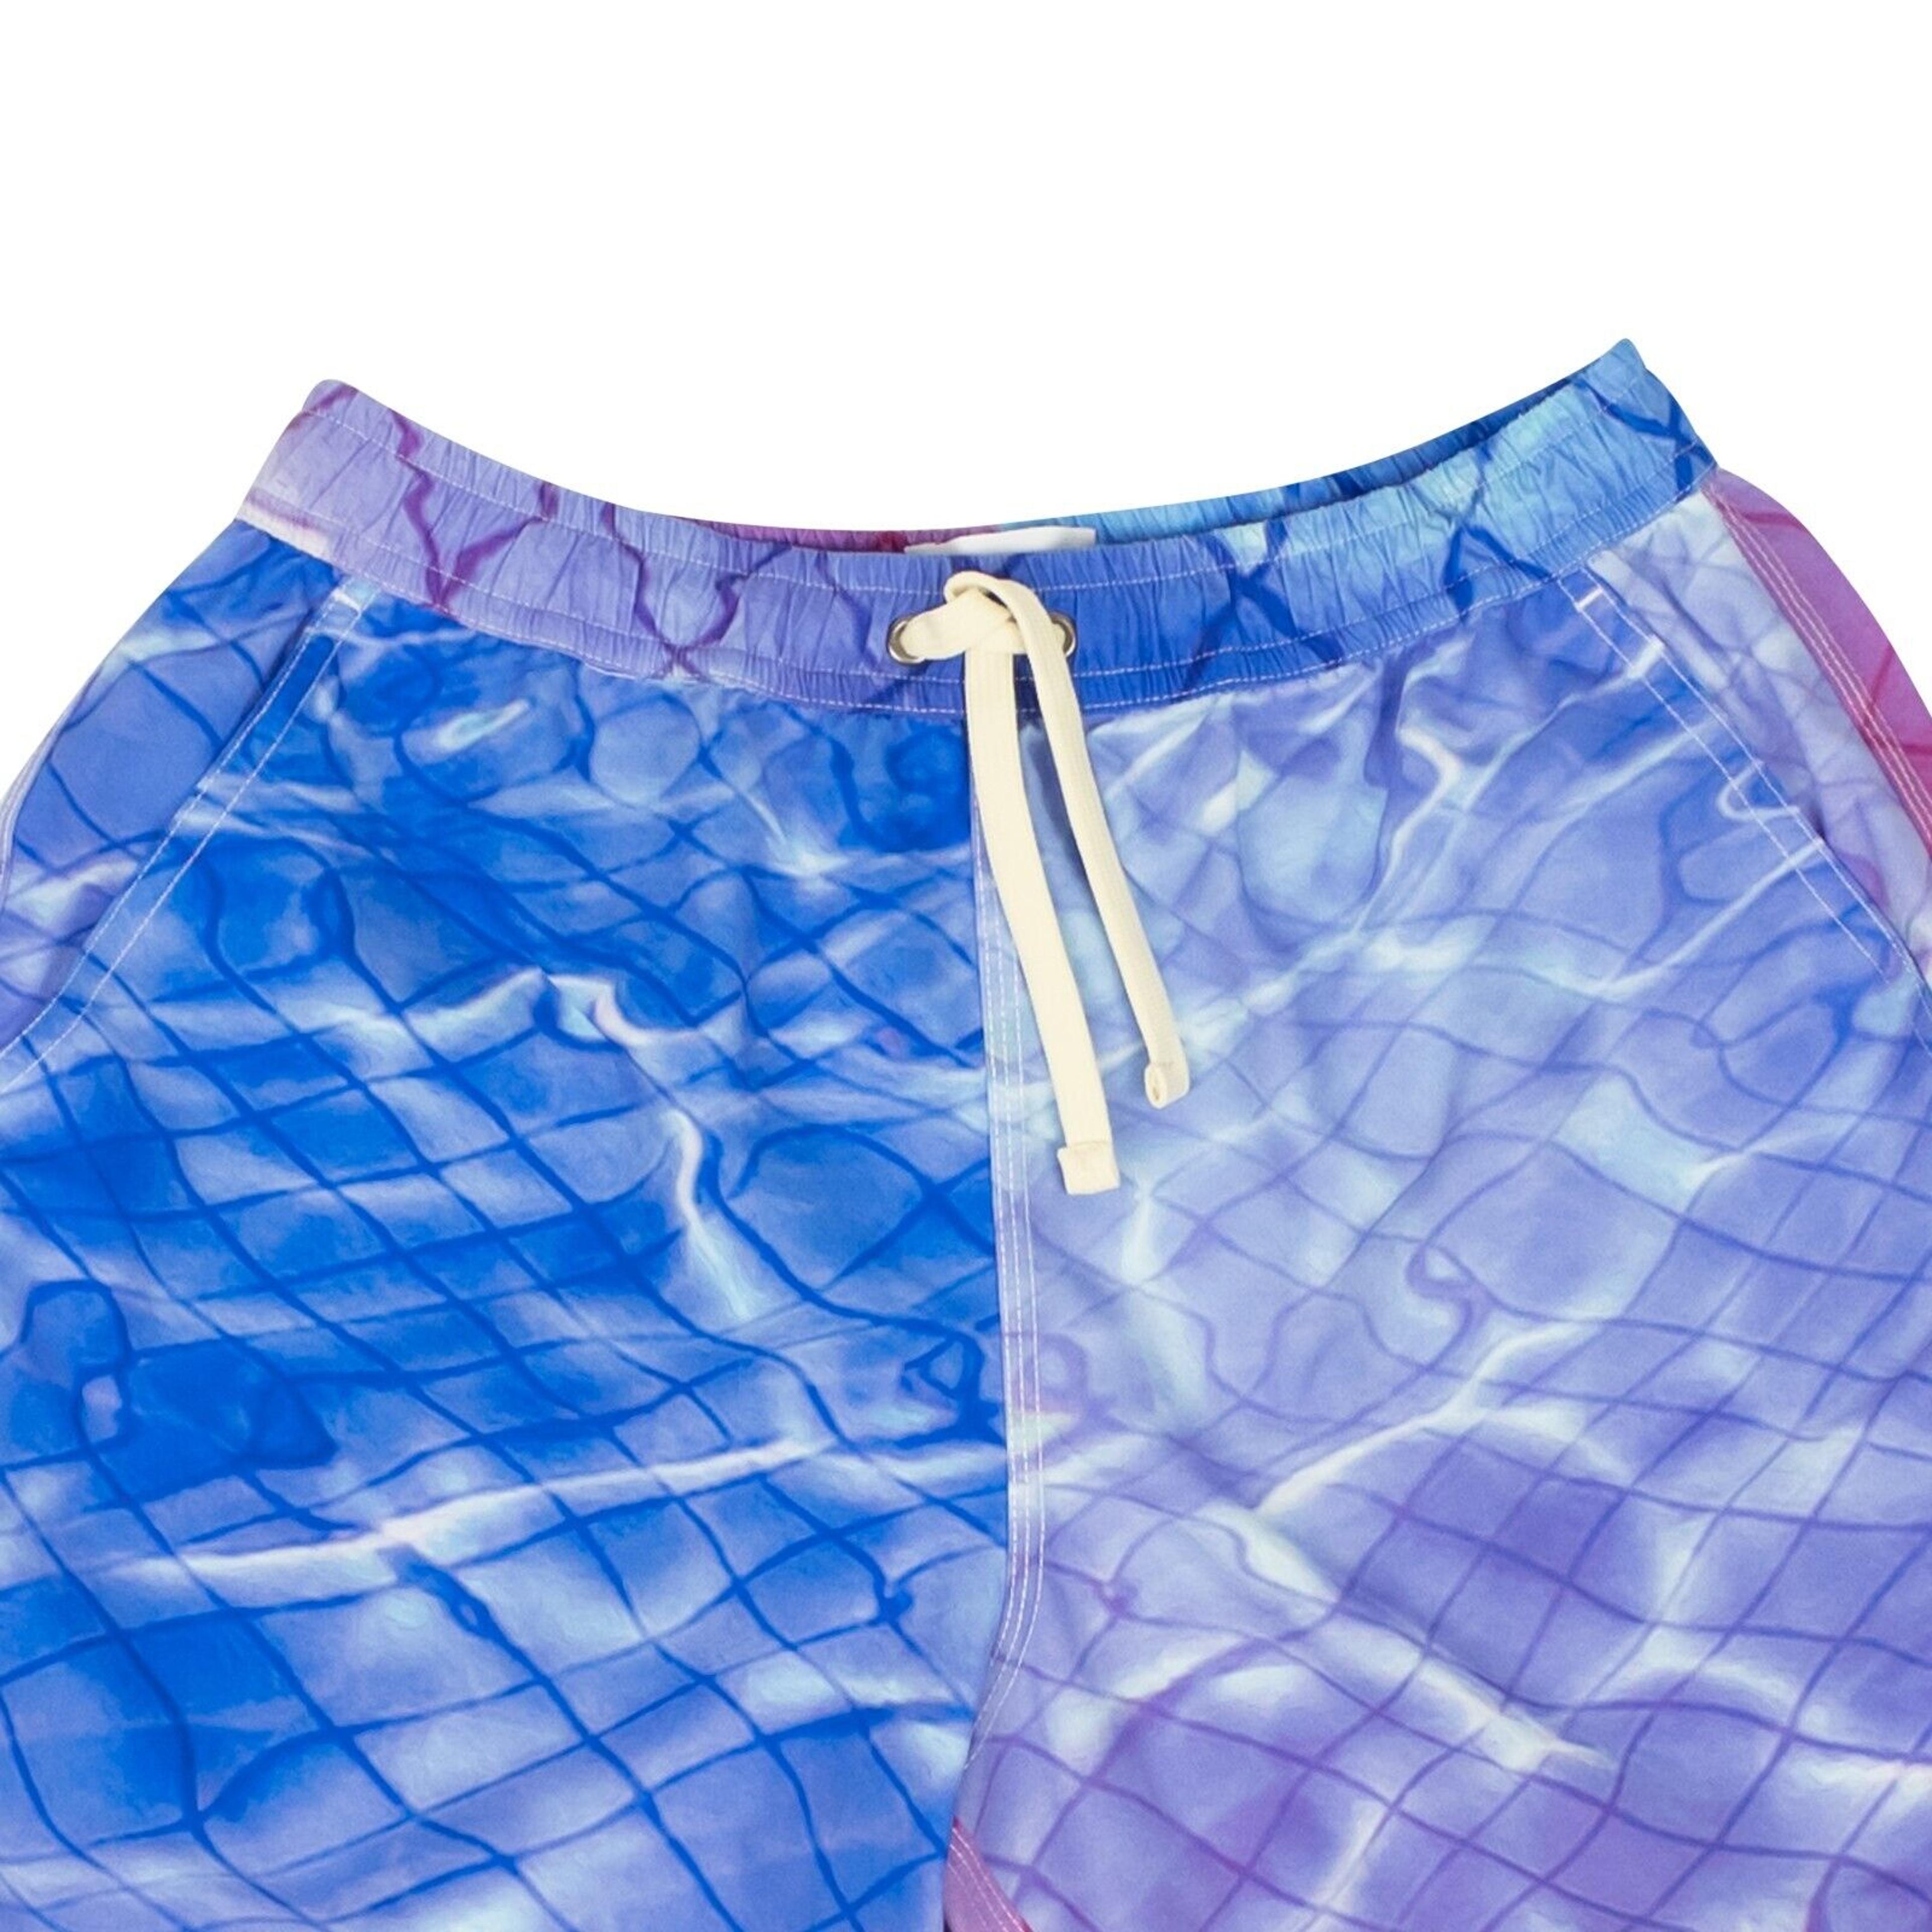 Alternate View 1 of Blue, Pink And Purple Pool Print Swim Trunks